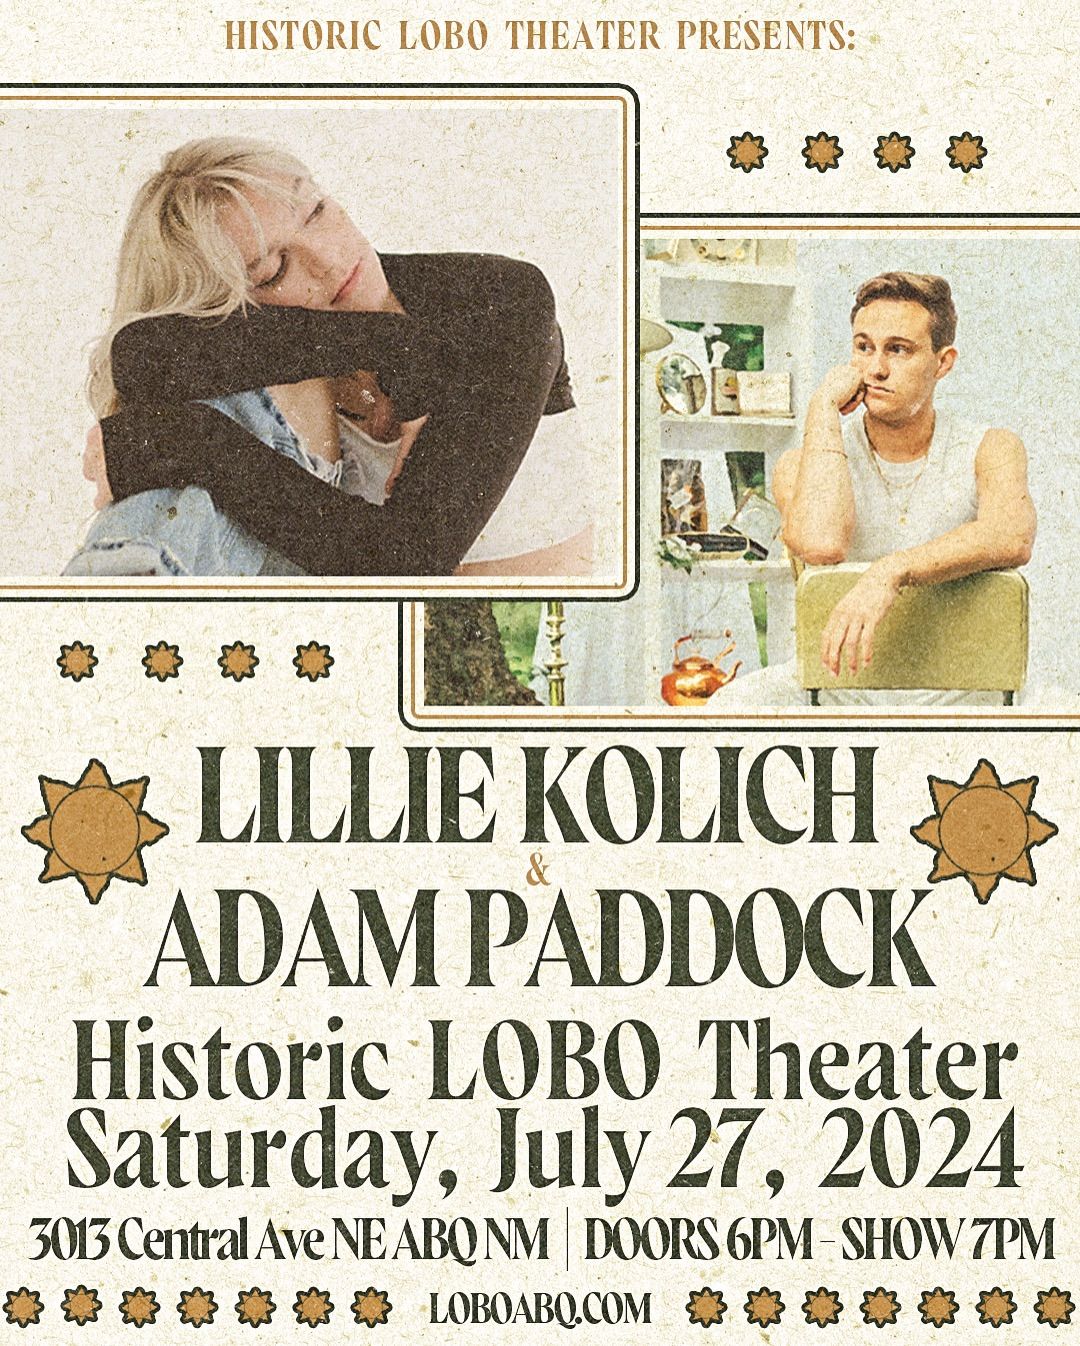 Lobo Theater presents: Adam Paddock and Lillie Kolich